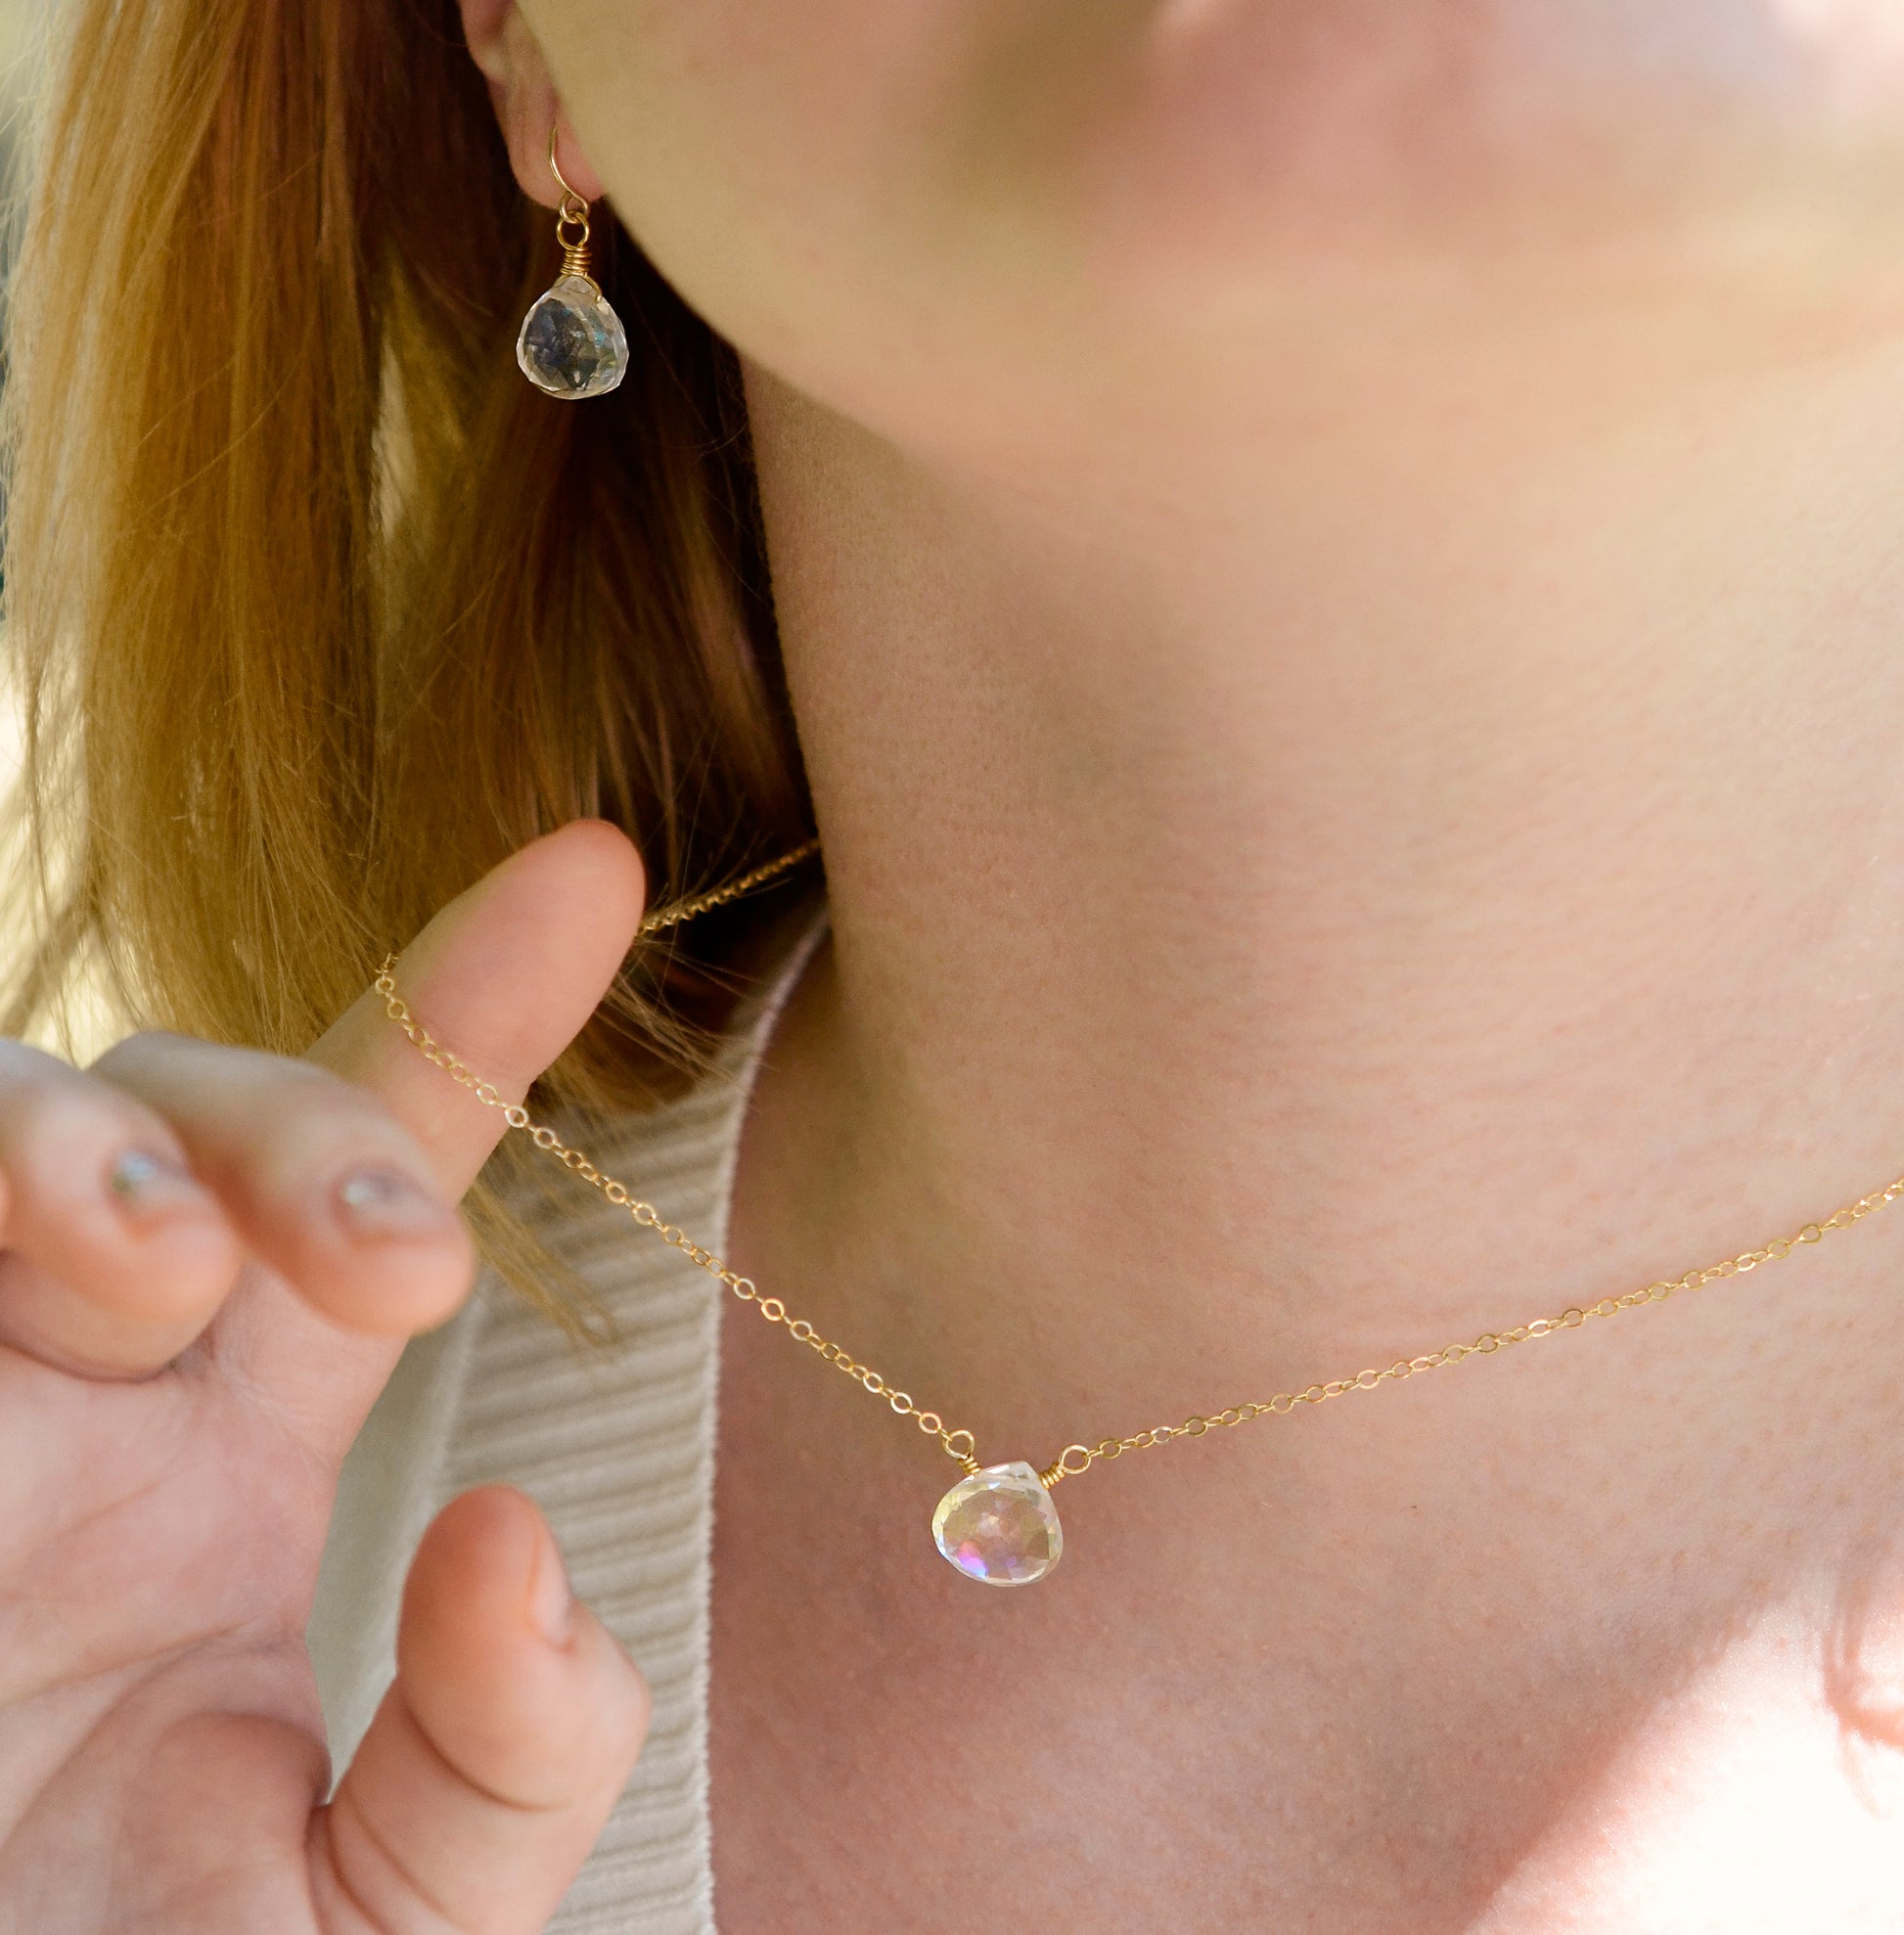 Rainbow Mystic Topaz Teardrop Necklace - Sterling Silver or Gold Filled, Rainbow Gemstone Pendant